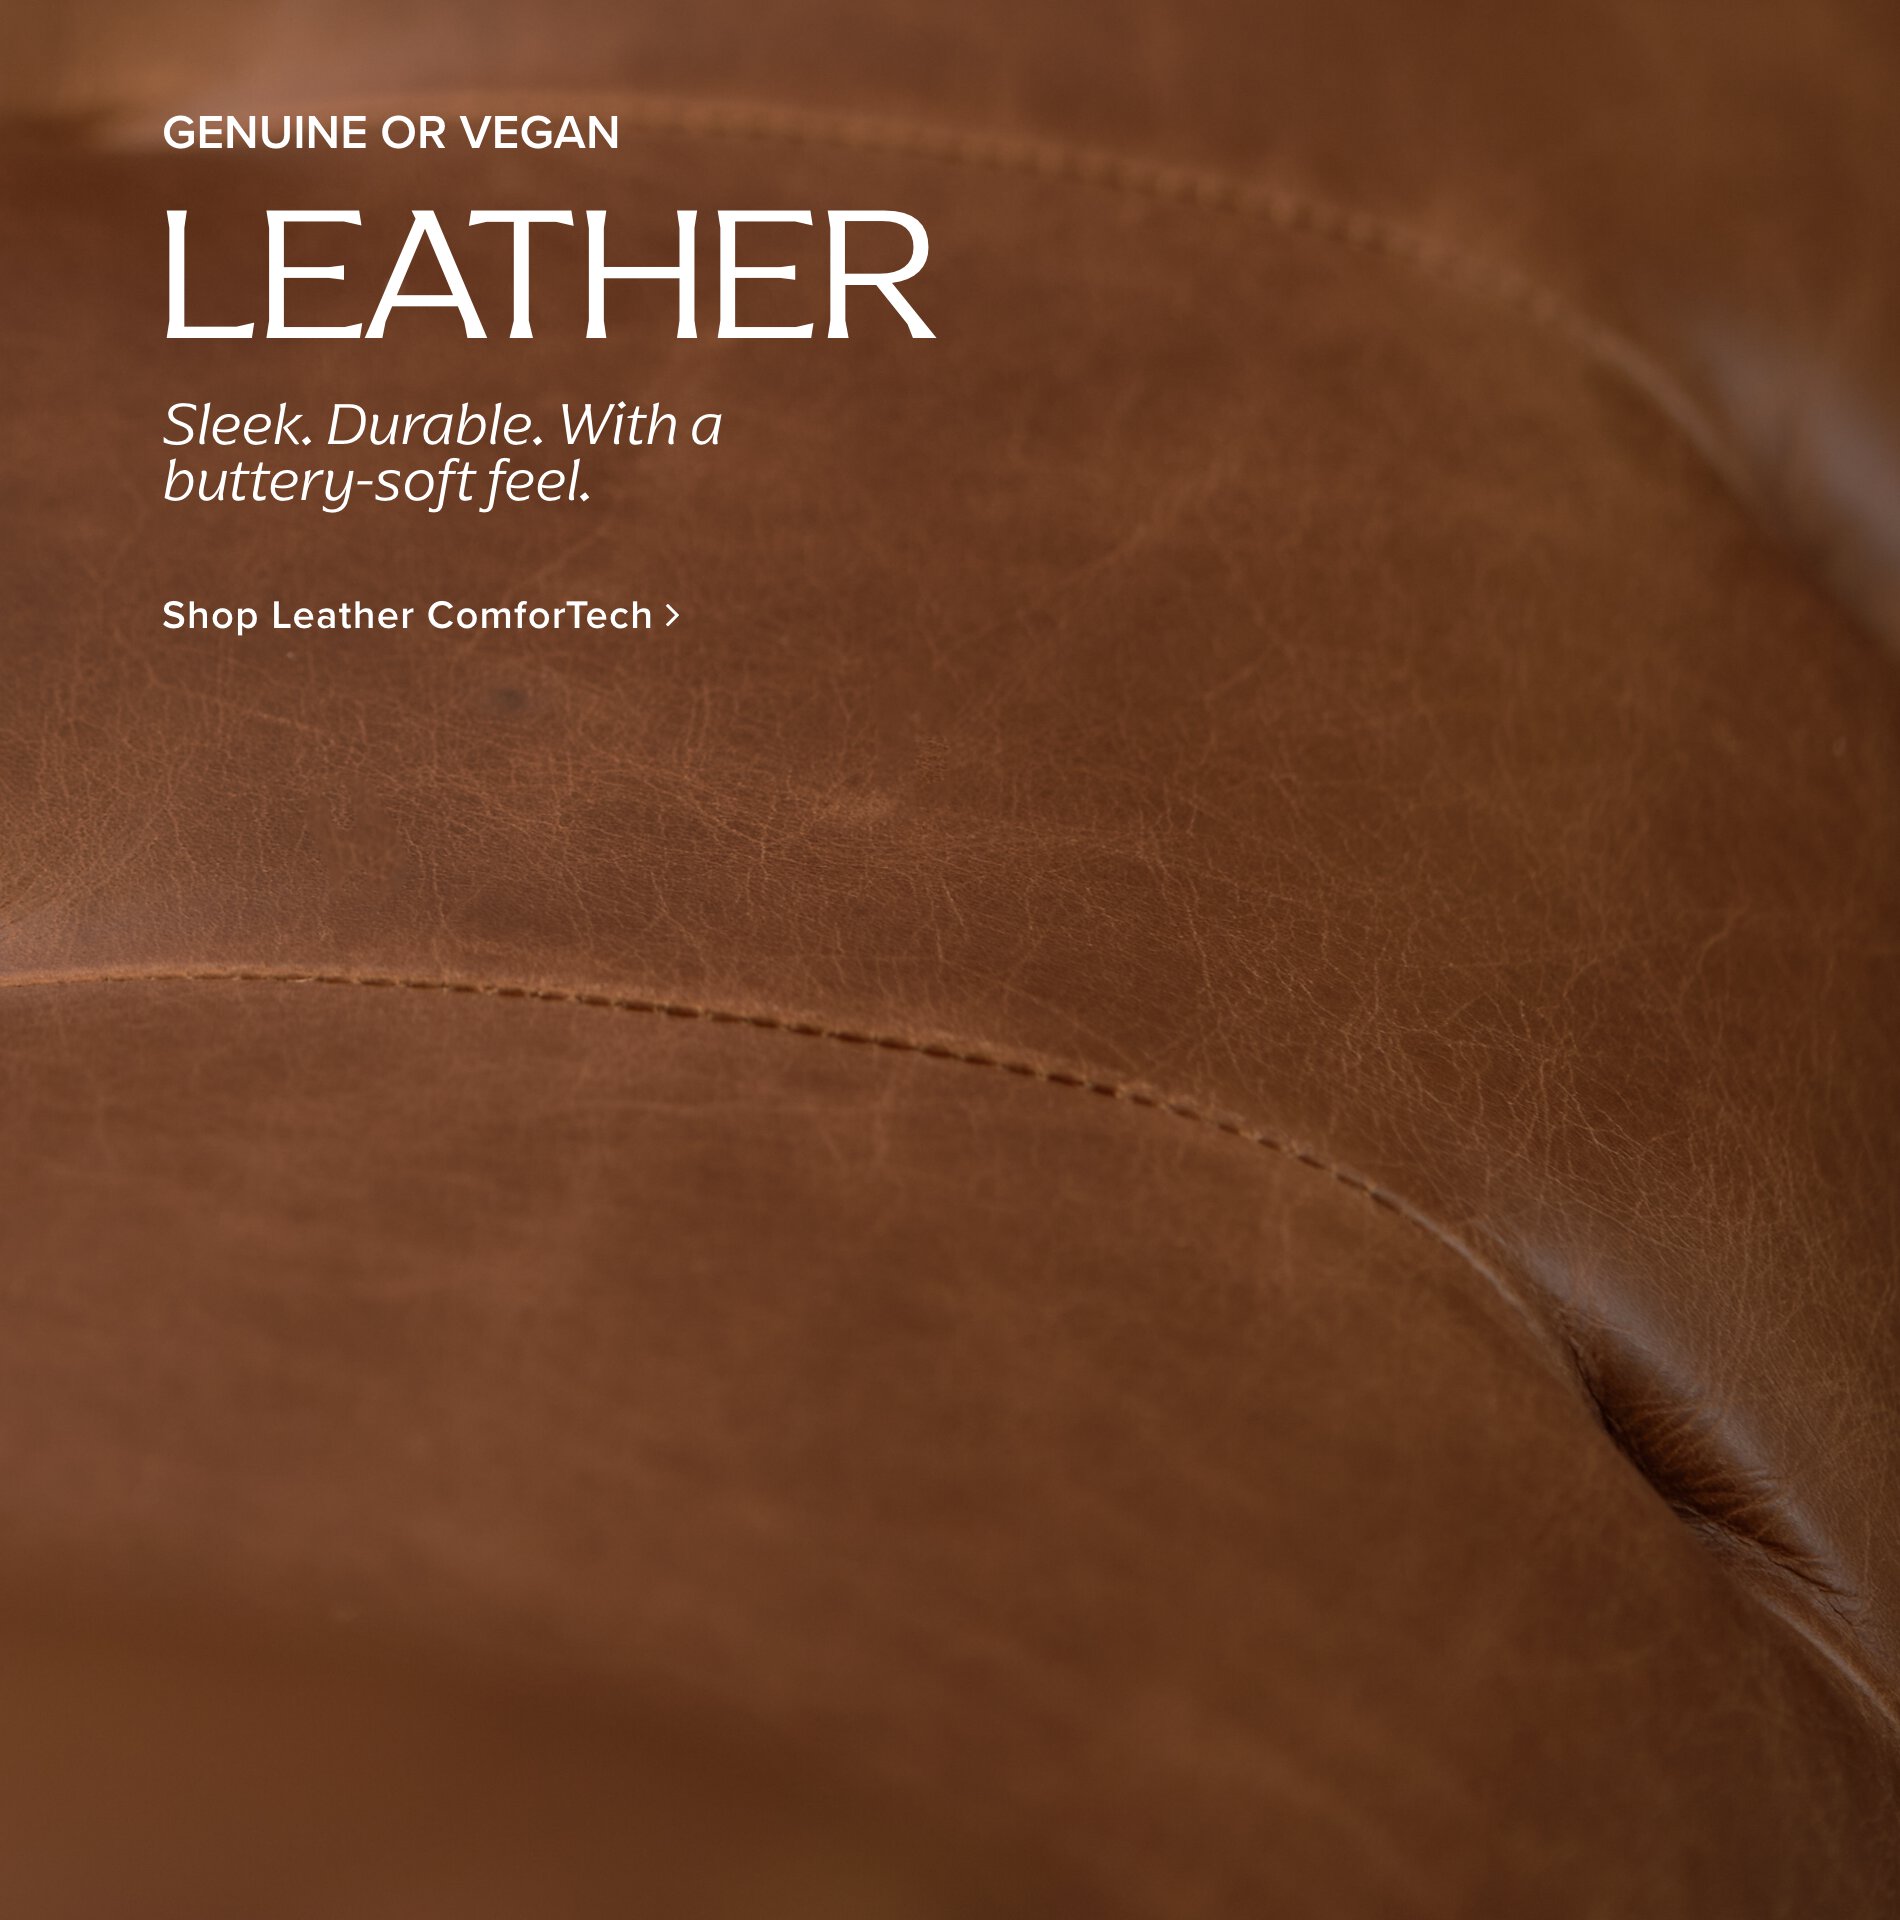 Genuine or Vegan Leather Looks